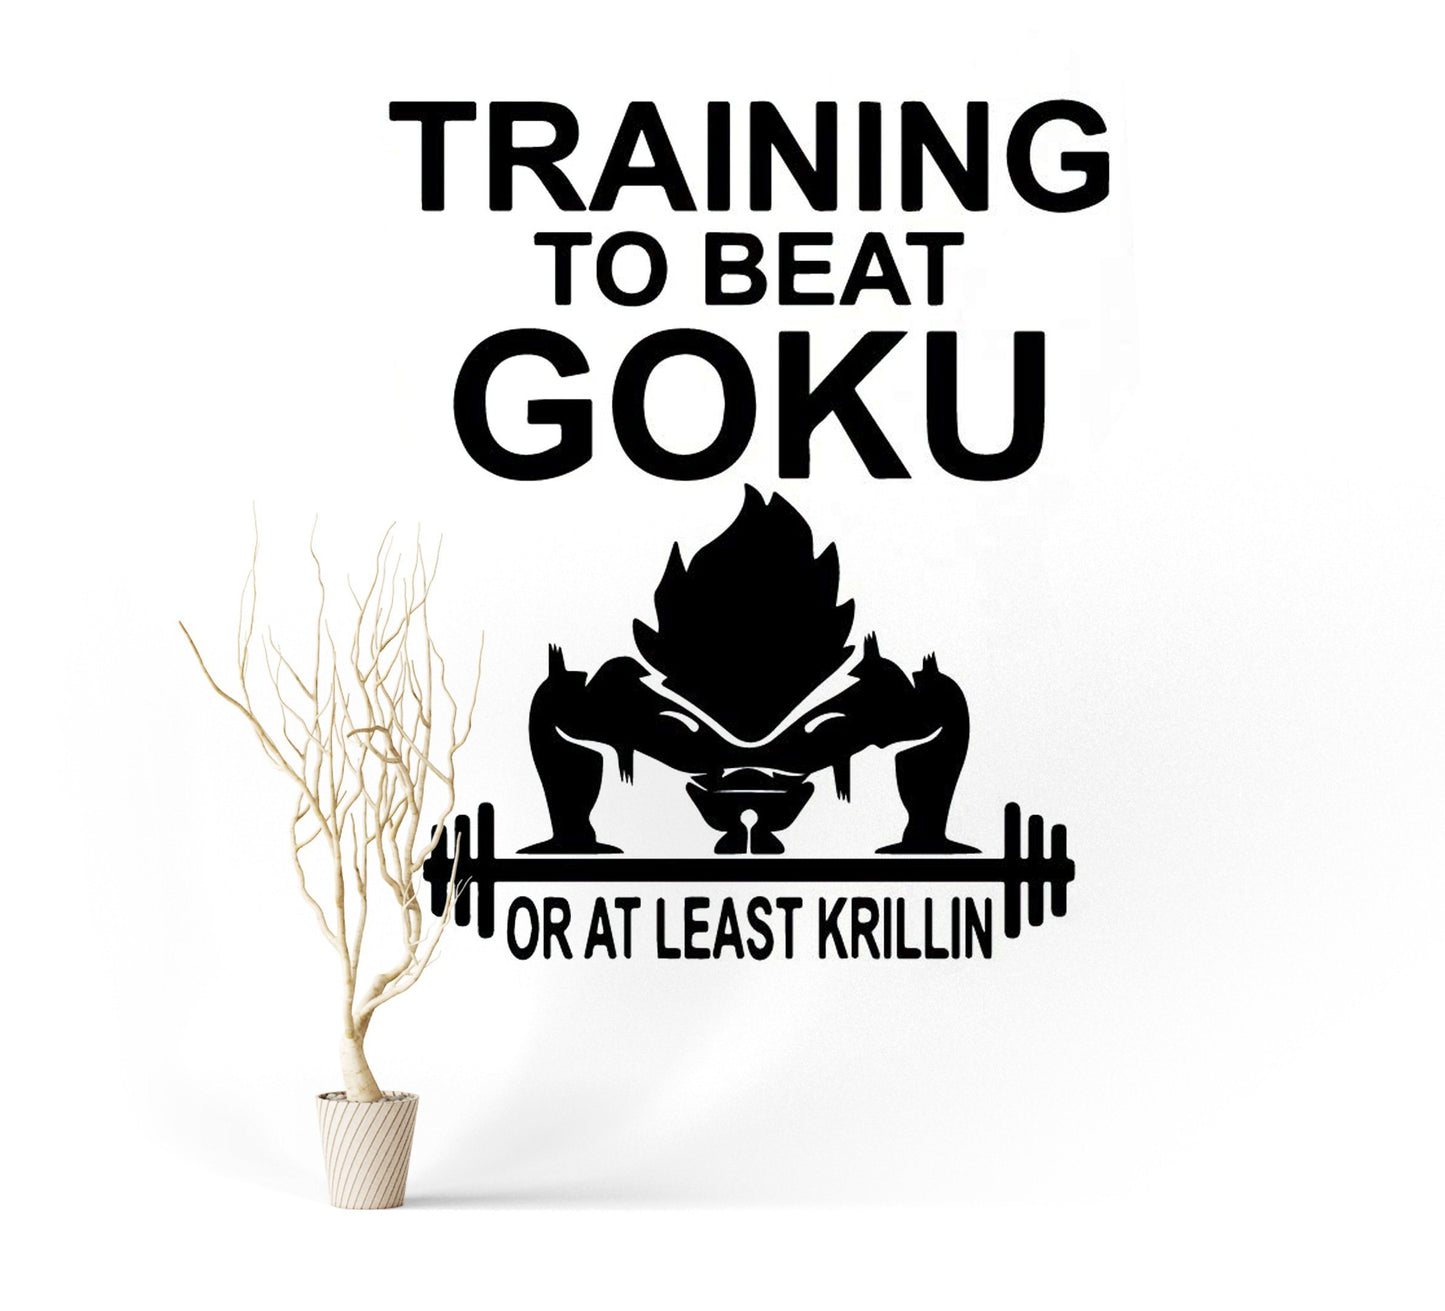 Stickers Mural Dragon Ball - Training Goku 